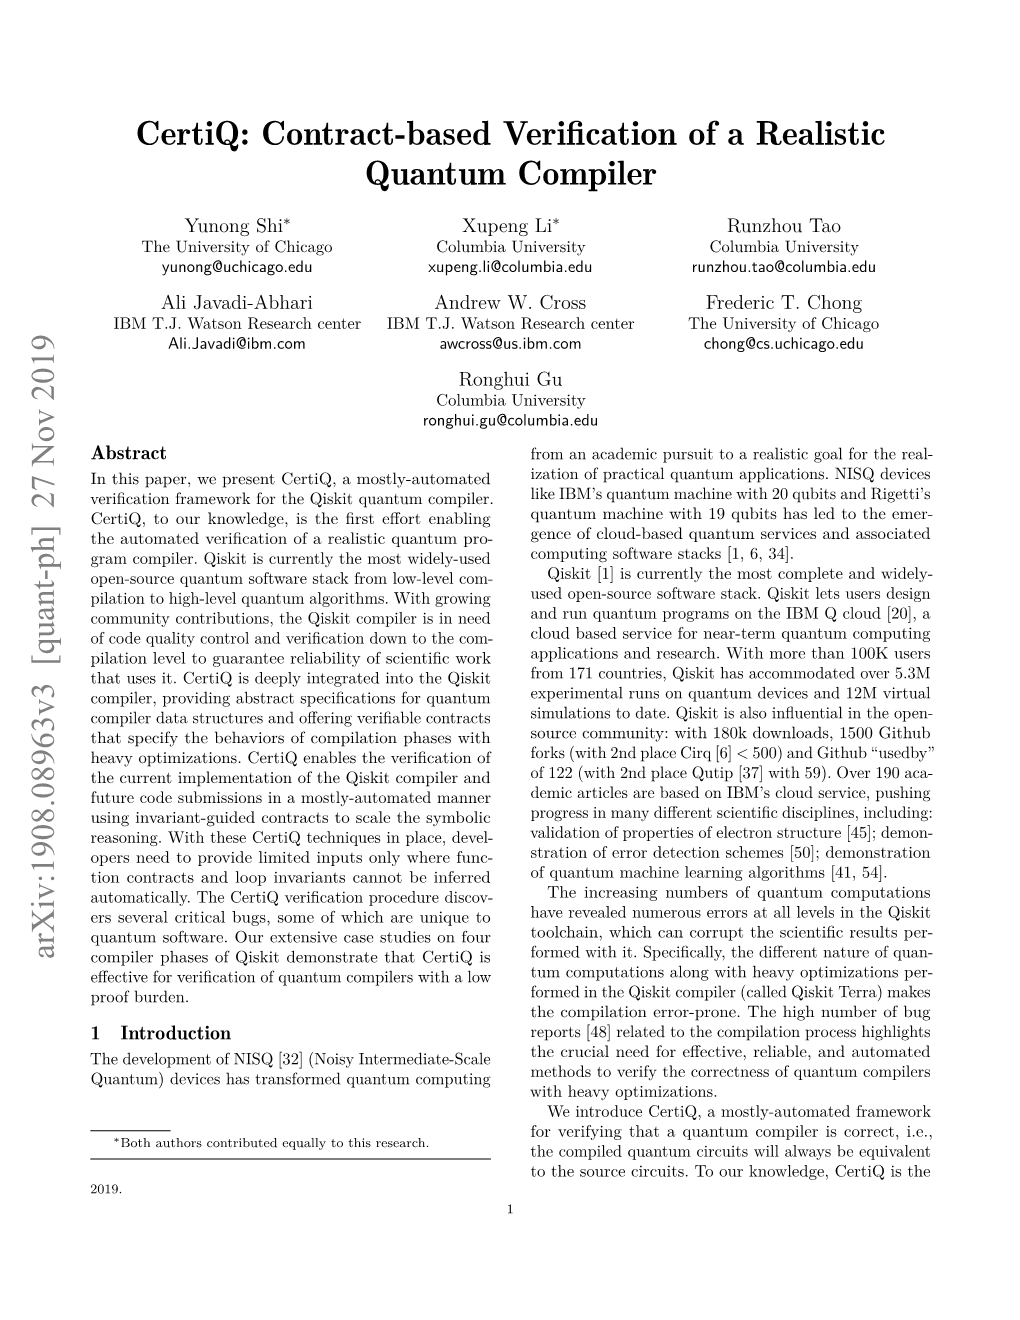 Certiq: Contract-Based Verification of a Realistic Quantum Compiler